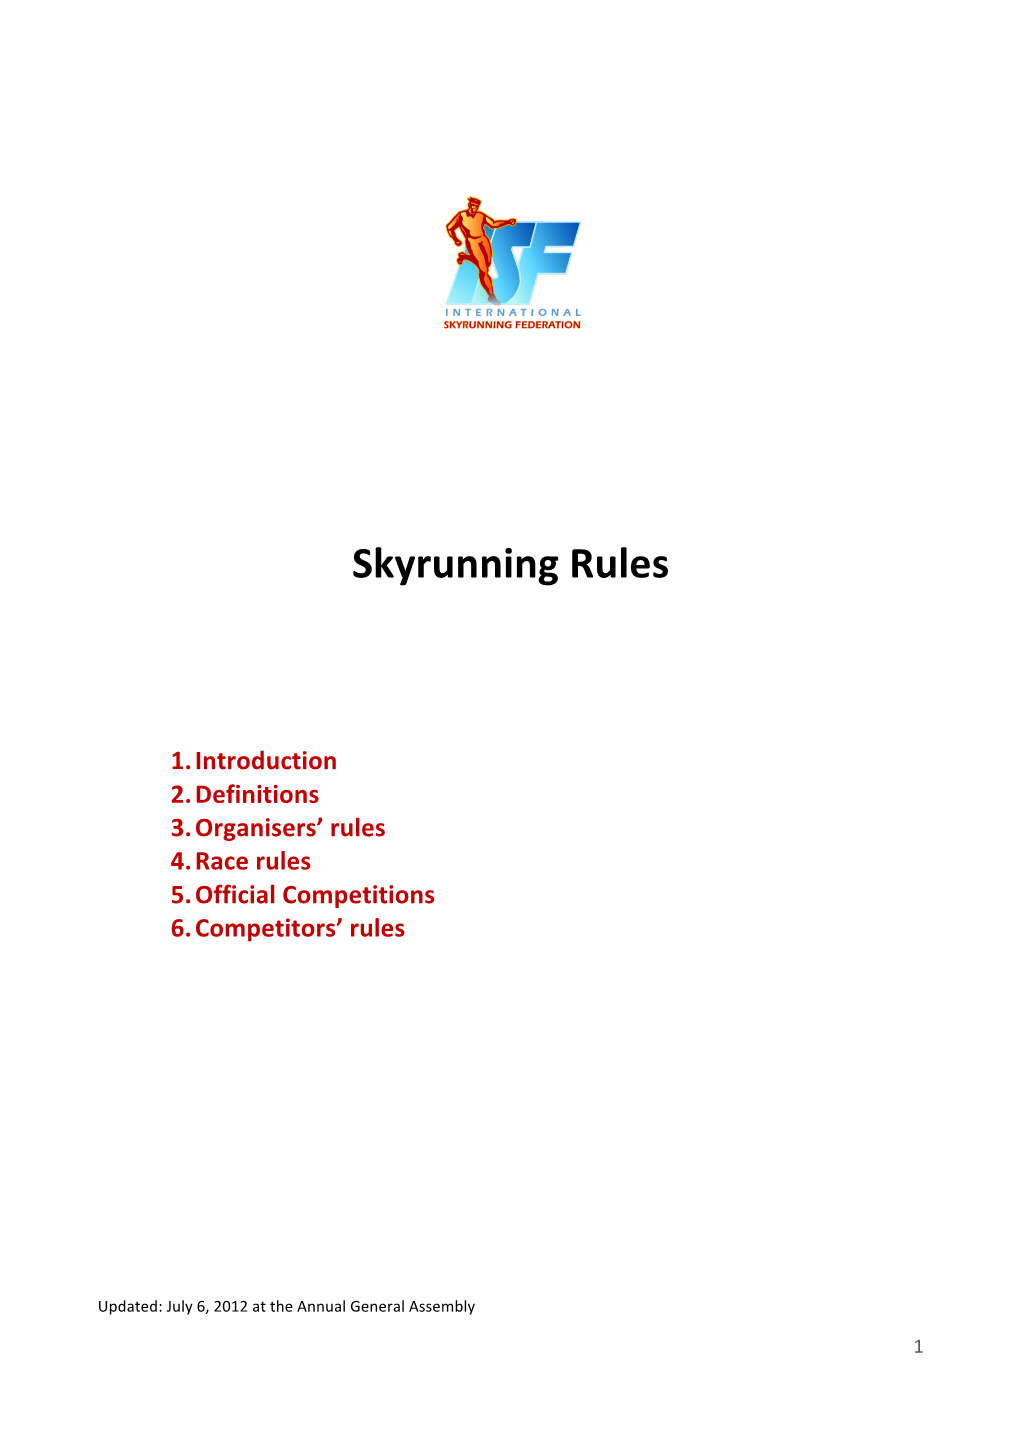 ISF Skyrunning Rules